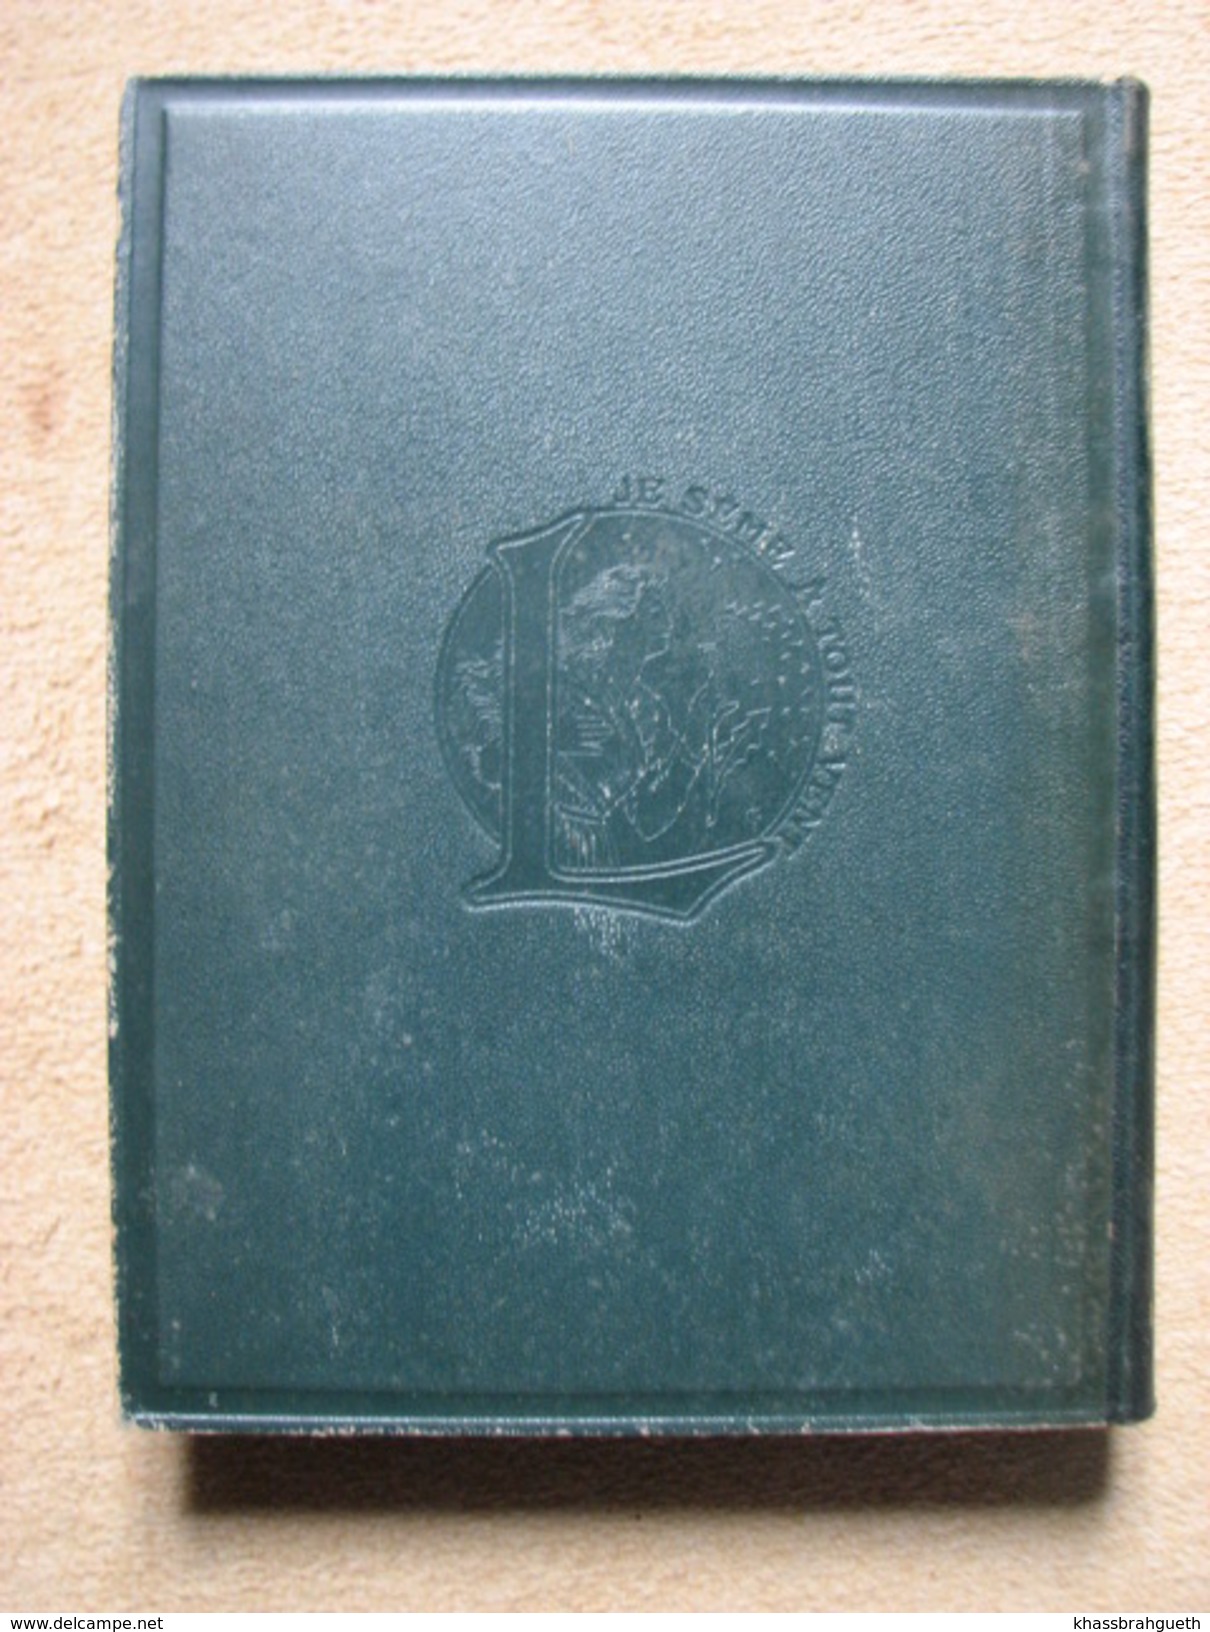 FELIX GUIRAND - MYTHOLOGIE GENERALE - LAROUSSE (COPYRIGHT 1935) - Encyclopédies